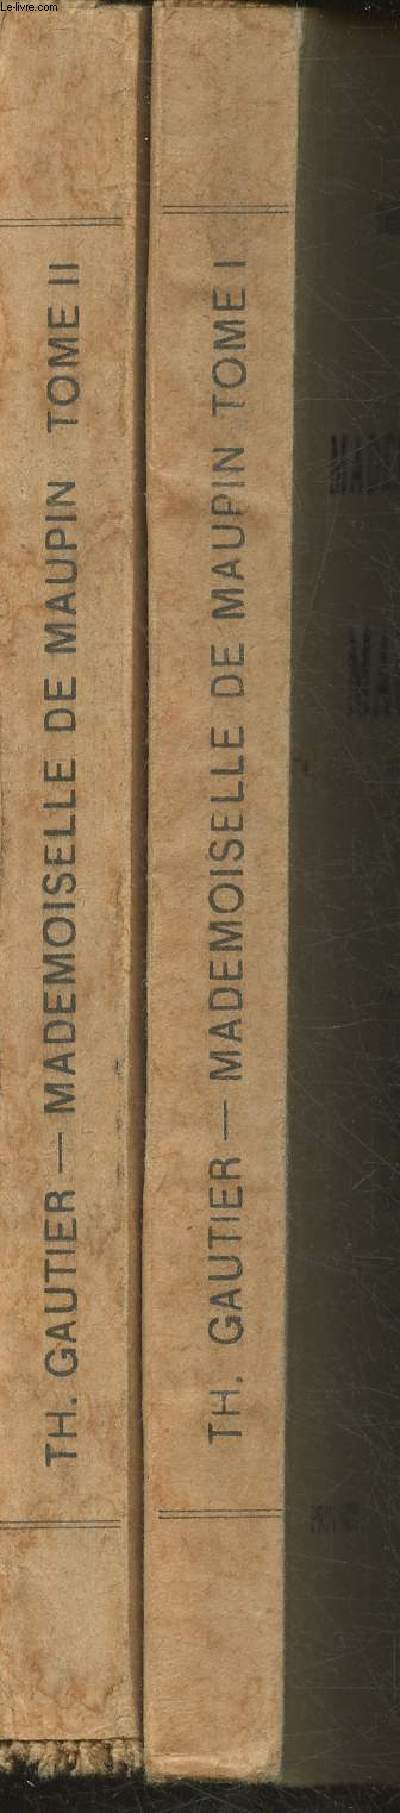 Mademoiselle de Maupin Tomes I et II en deux volumes (Collection 